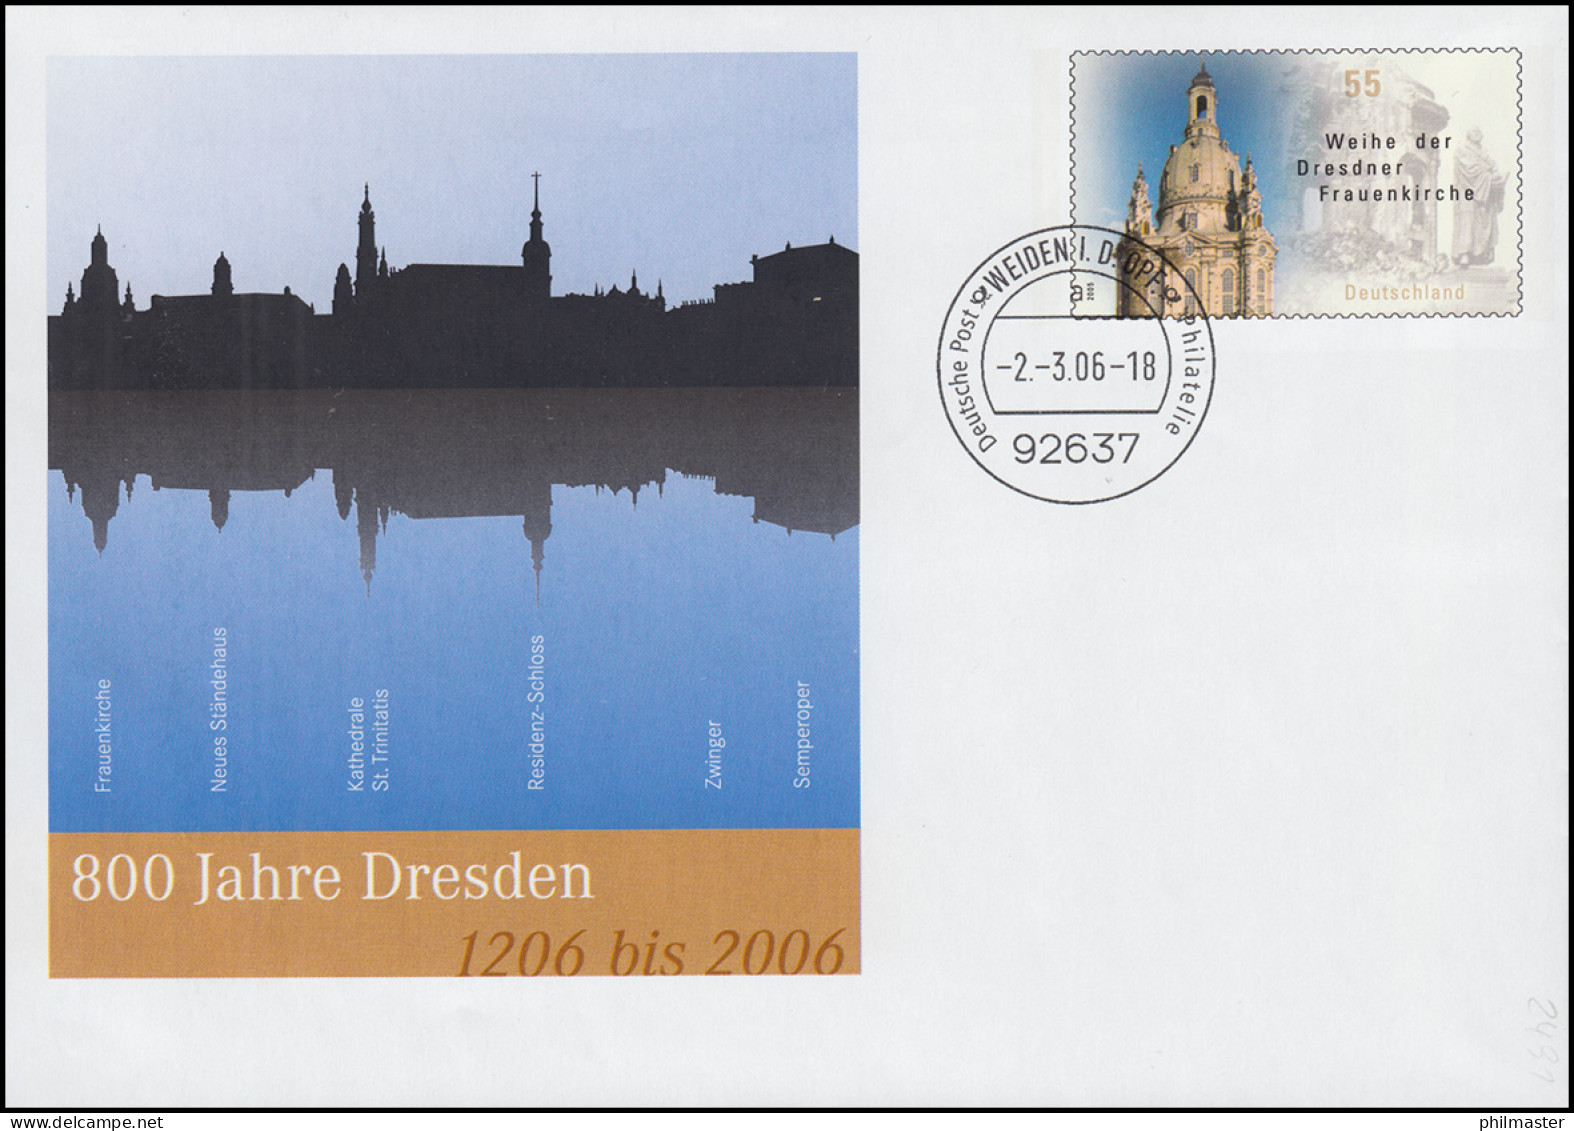 USo 112 Jubiläum 800 Jahre Dresden 2006, VS-O Weiden 2.3.06 - Enveloppes - Neuves